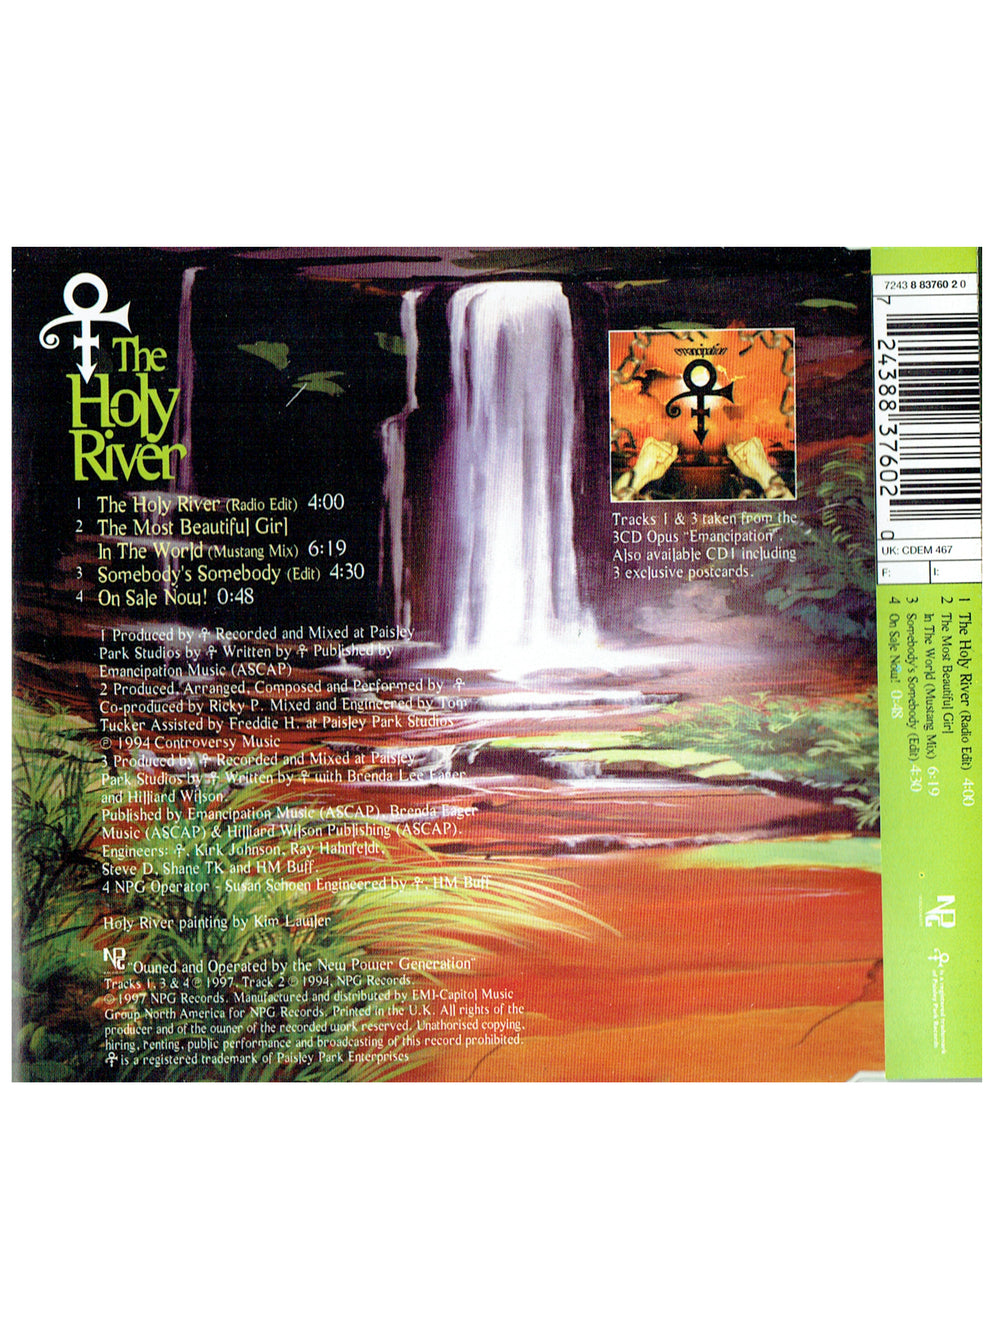 Prince The Holy River Part 2 CD Single 1997 Original 4 Track